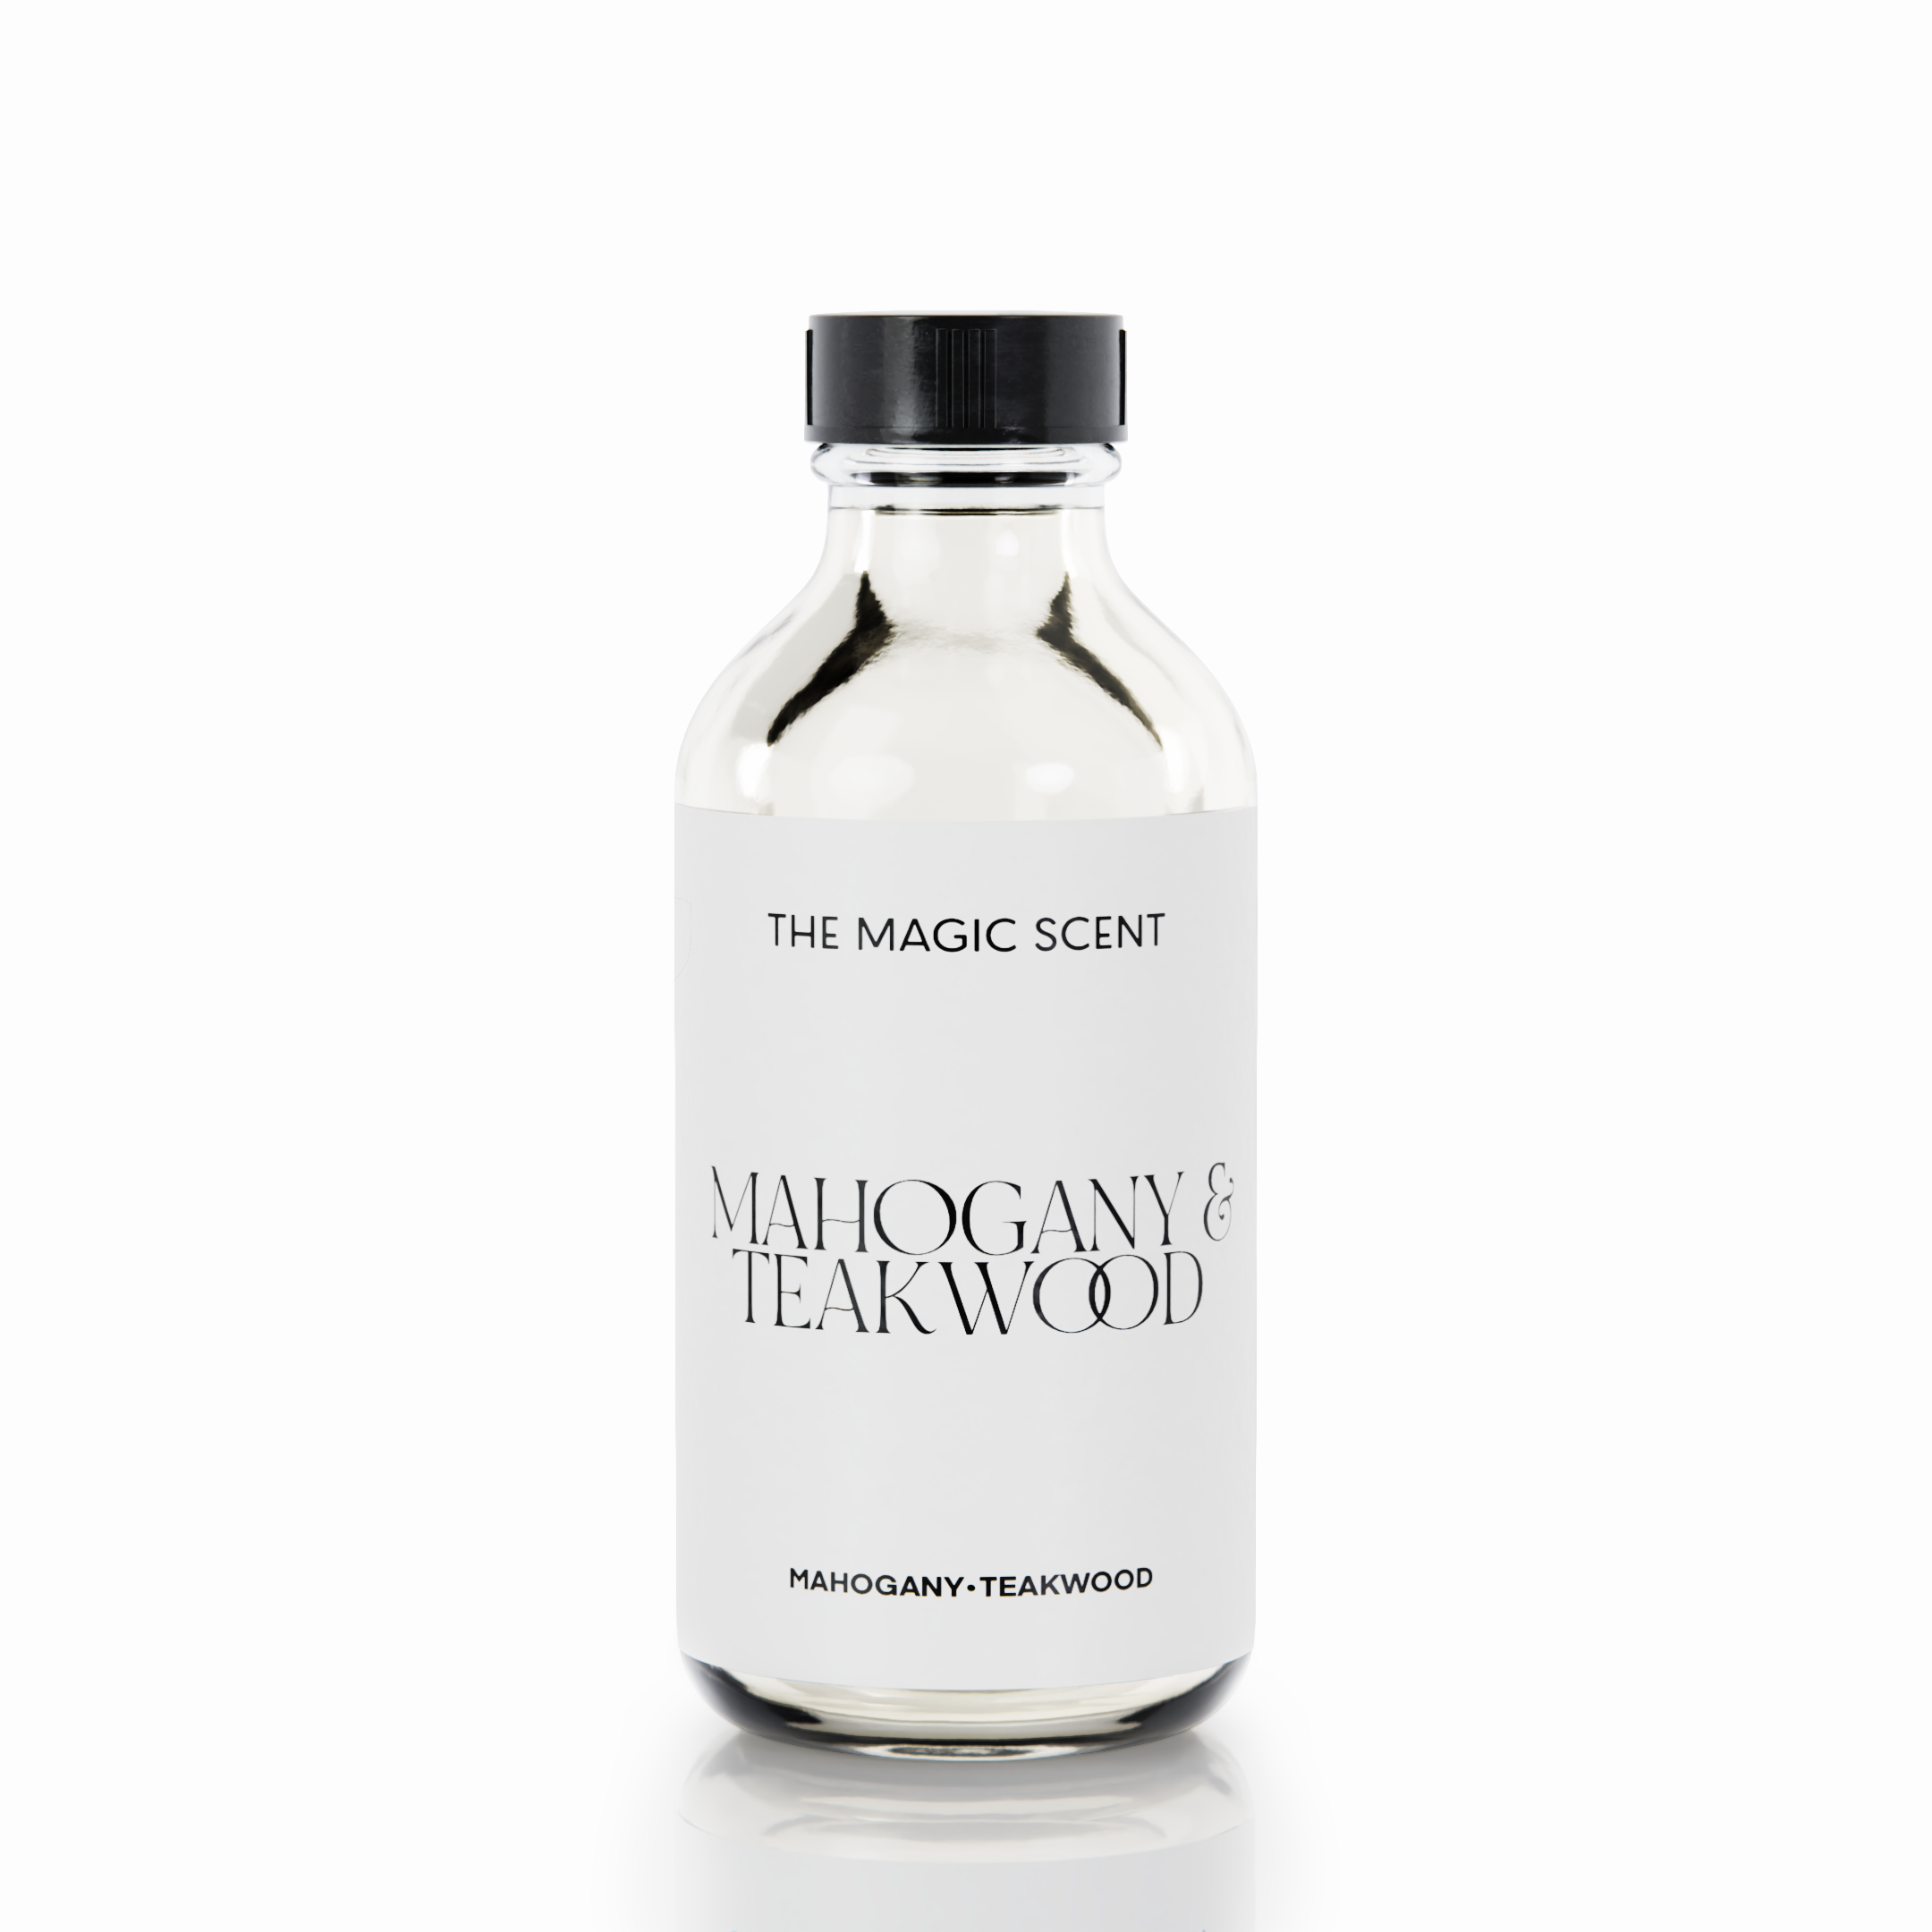 Mahogany Teakwood Fragrance Oil – Scentiment